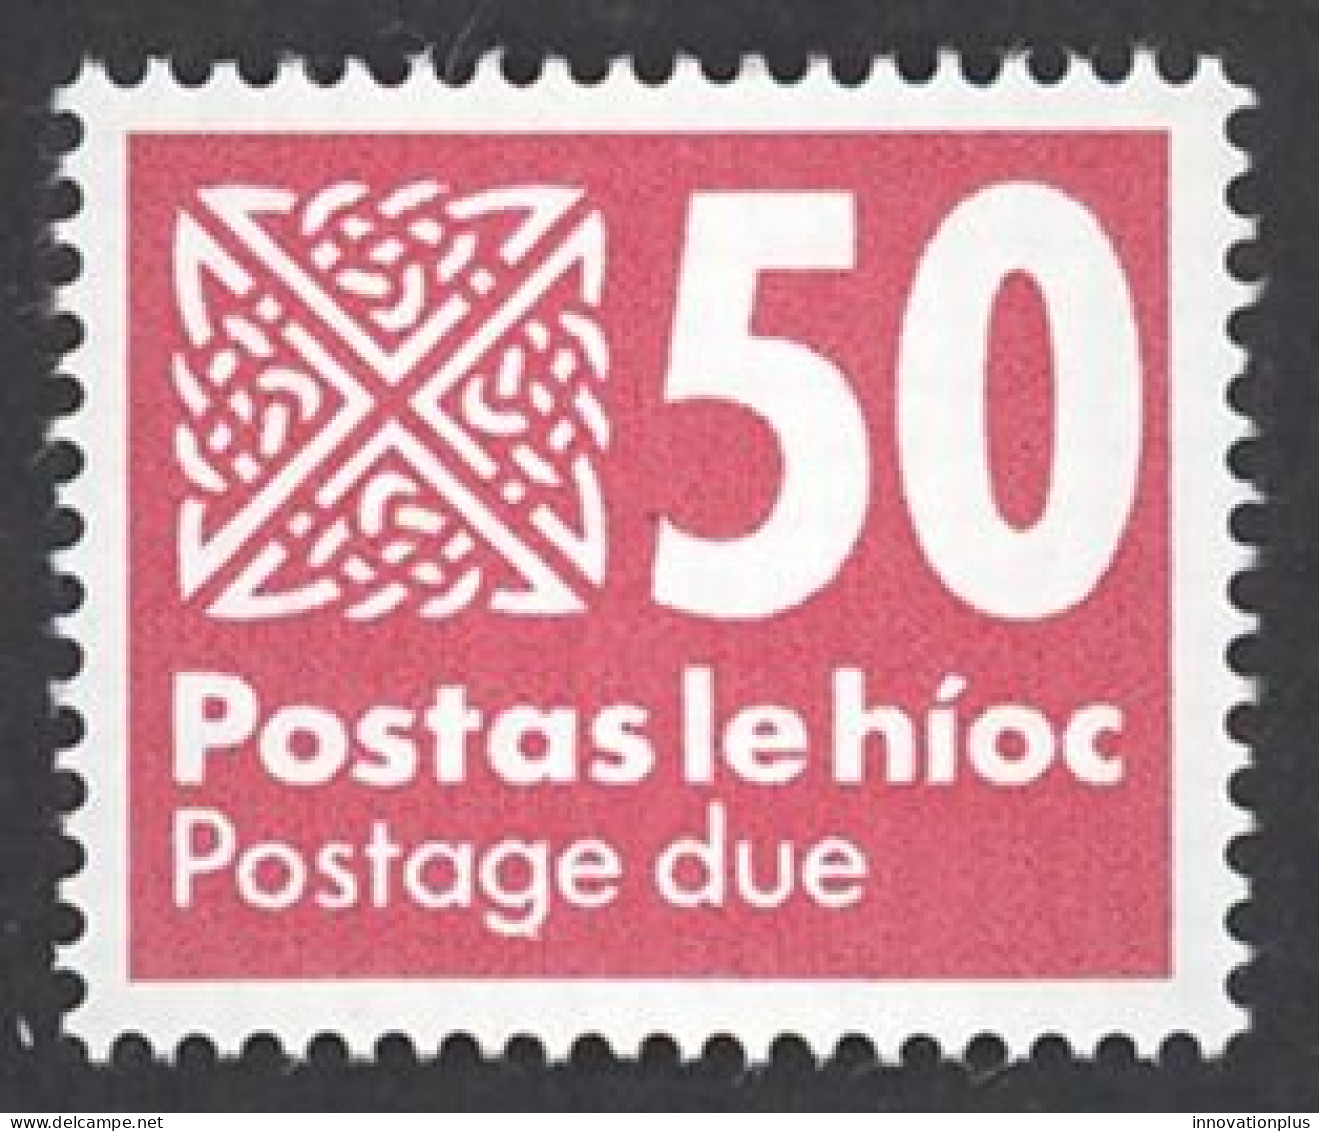 Ireland Sc# J36 MNH 1985 50p Postage Due - Portomarken